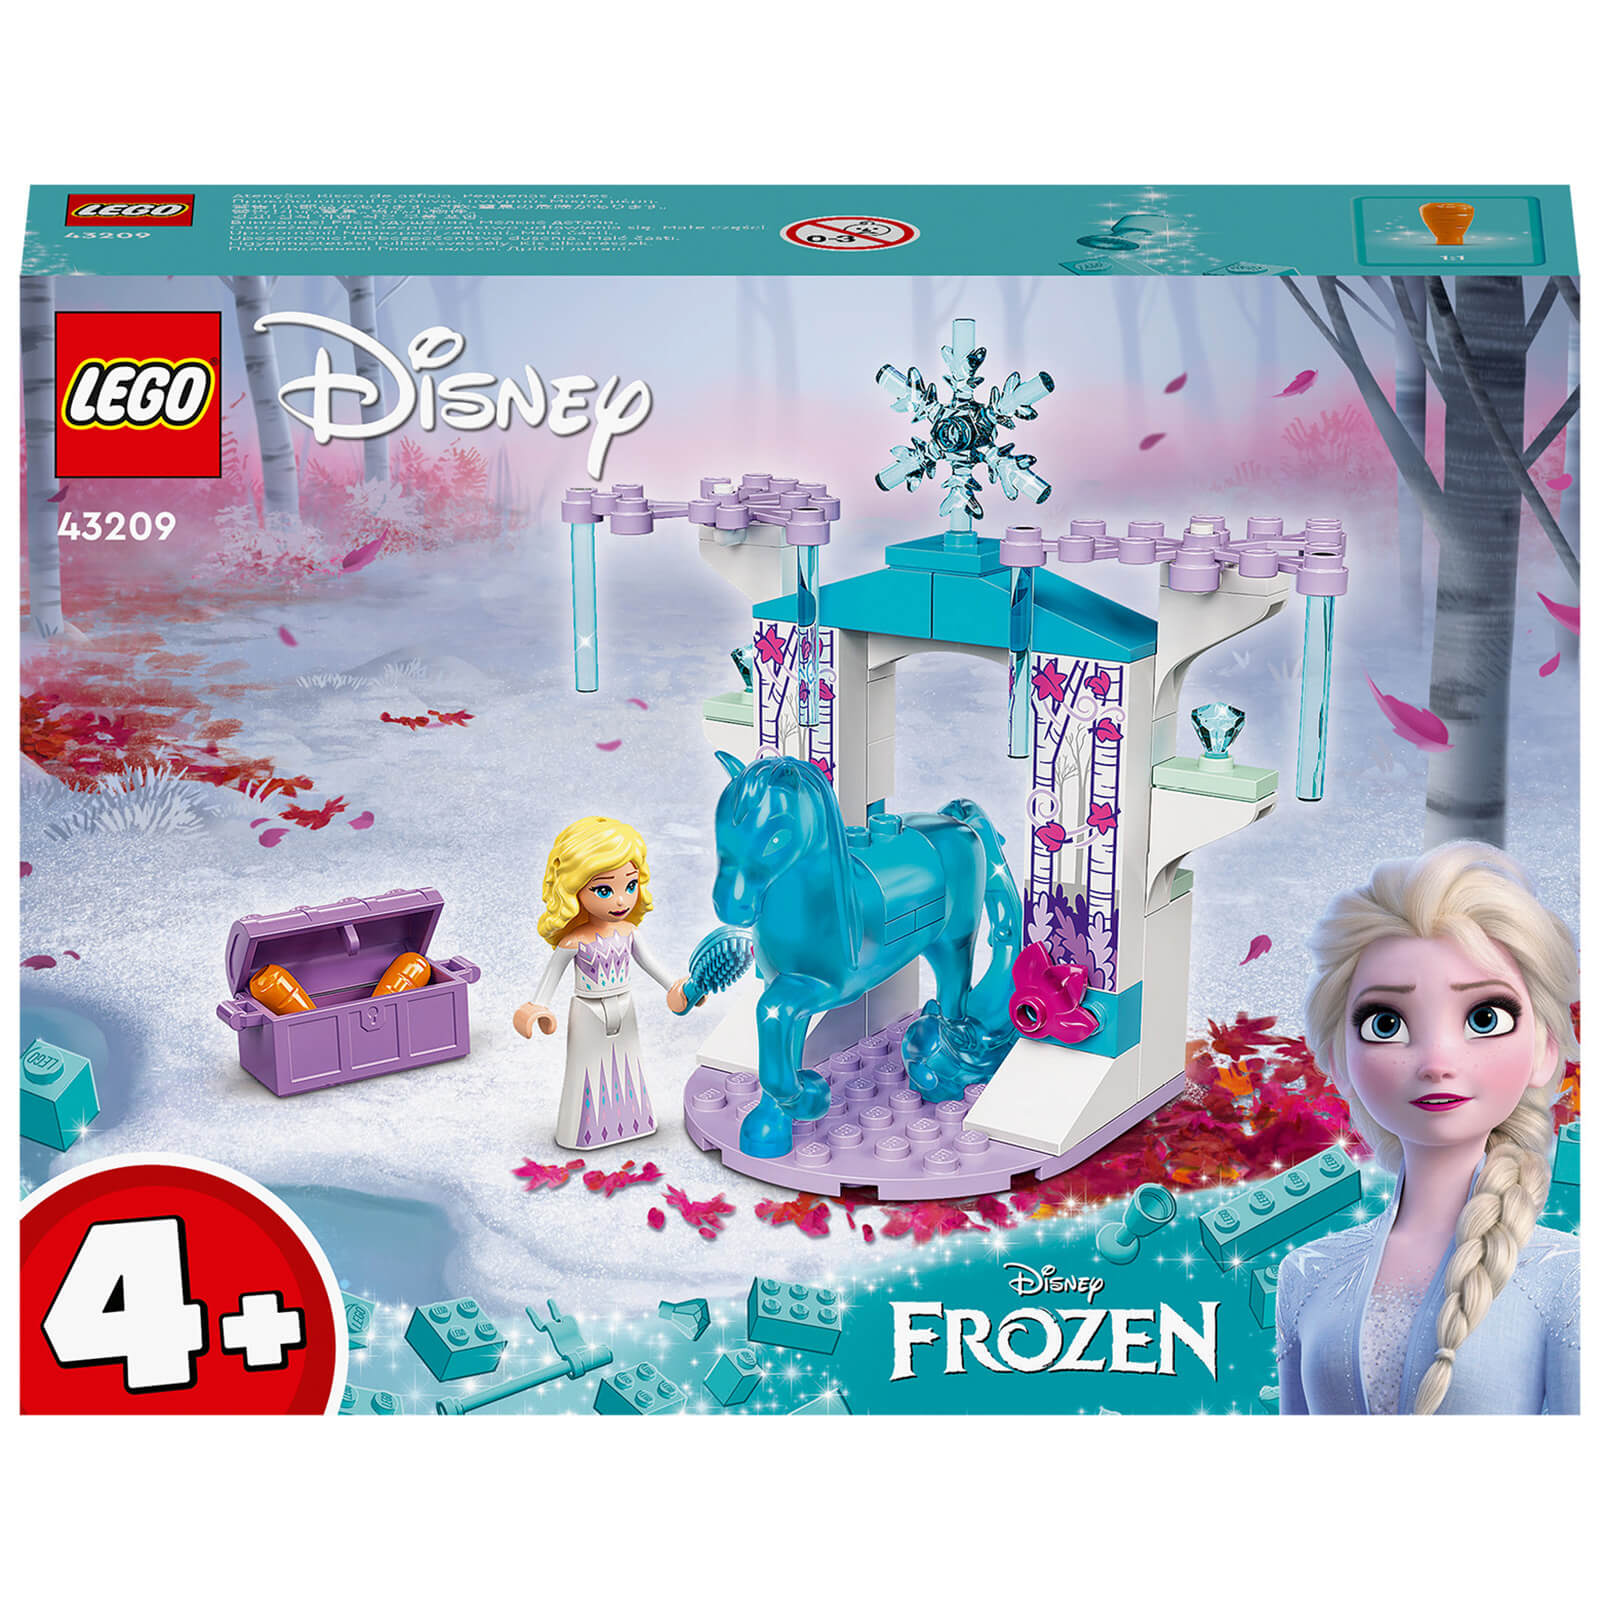 LEGO Disney Frozen Elsa and the Nokk’s Ice Stable Set (43209)